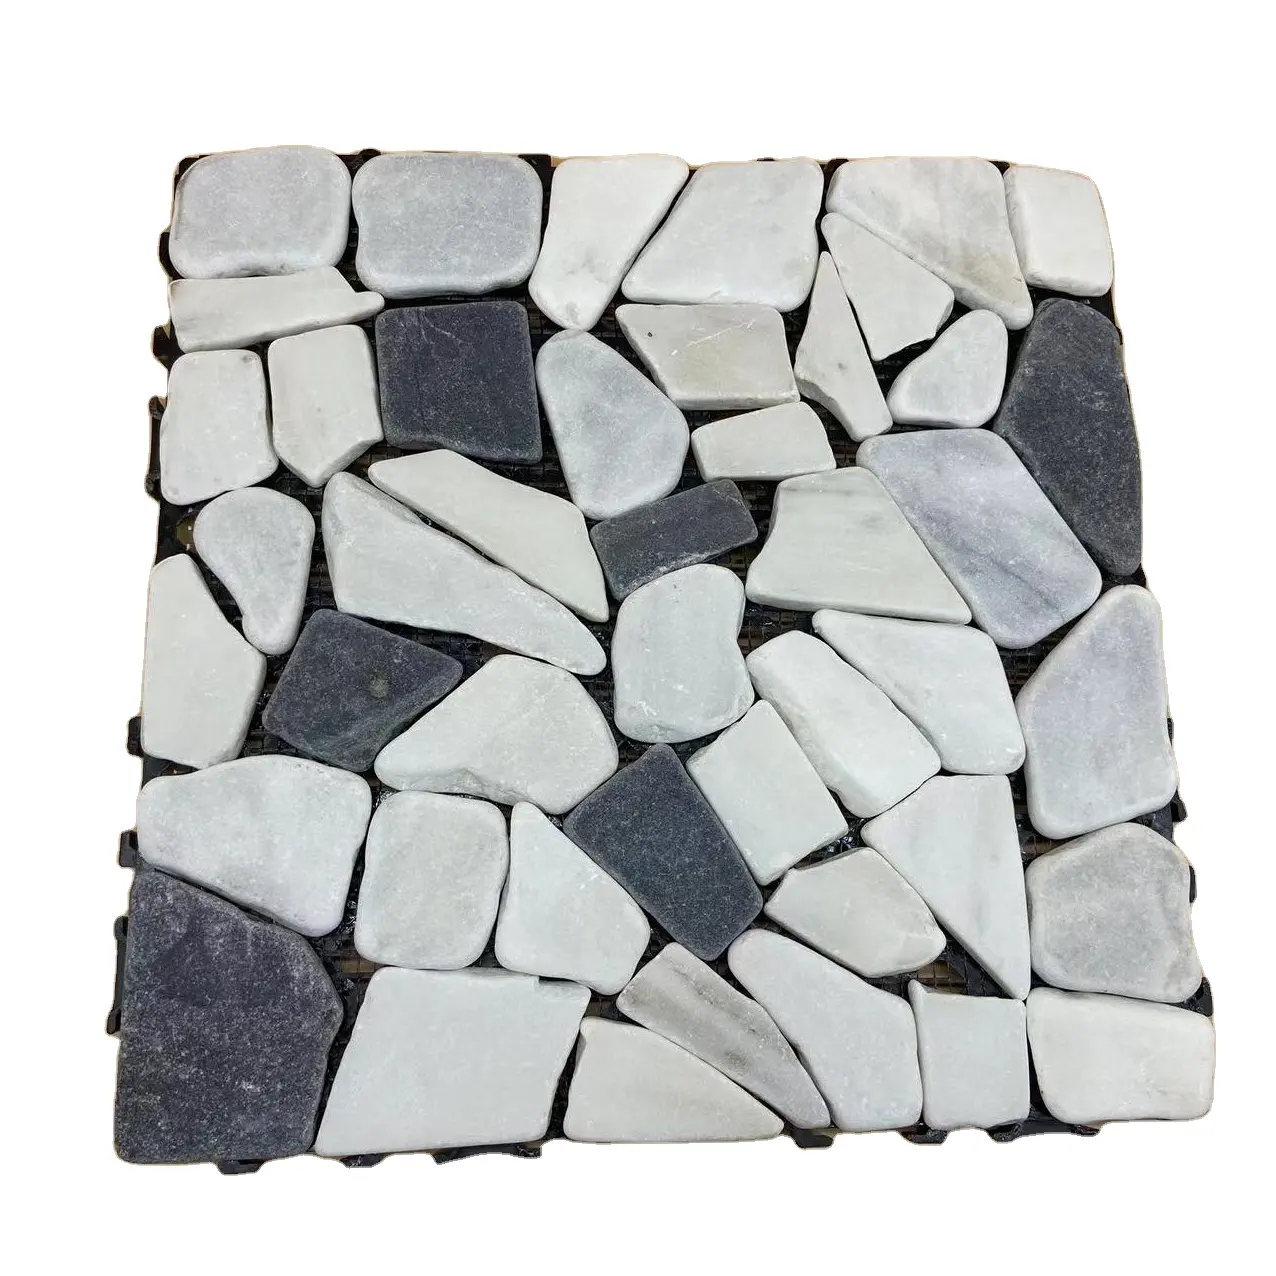 stone Decoration WPC DIY Decking Tiles 300*300mm Outdoor Interlocking Plastic Wood Flooring Tiles